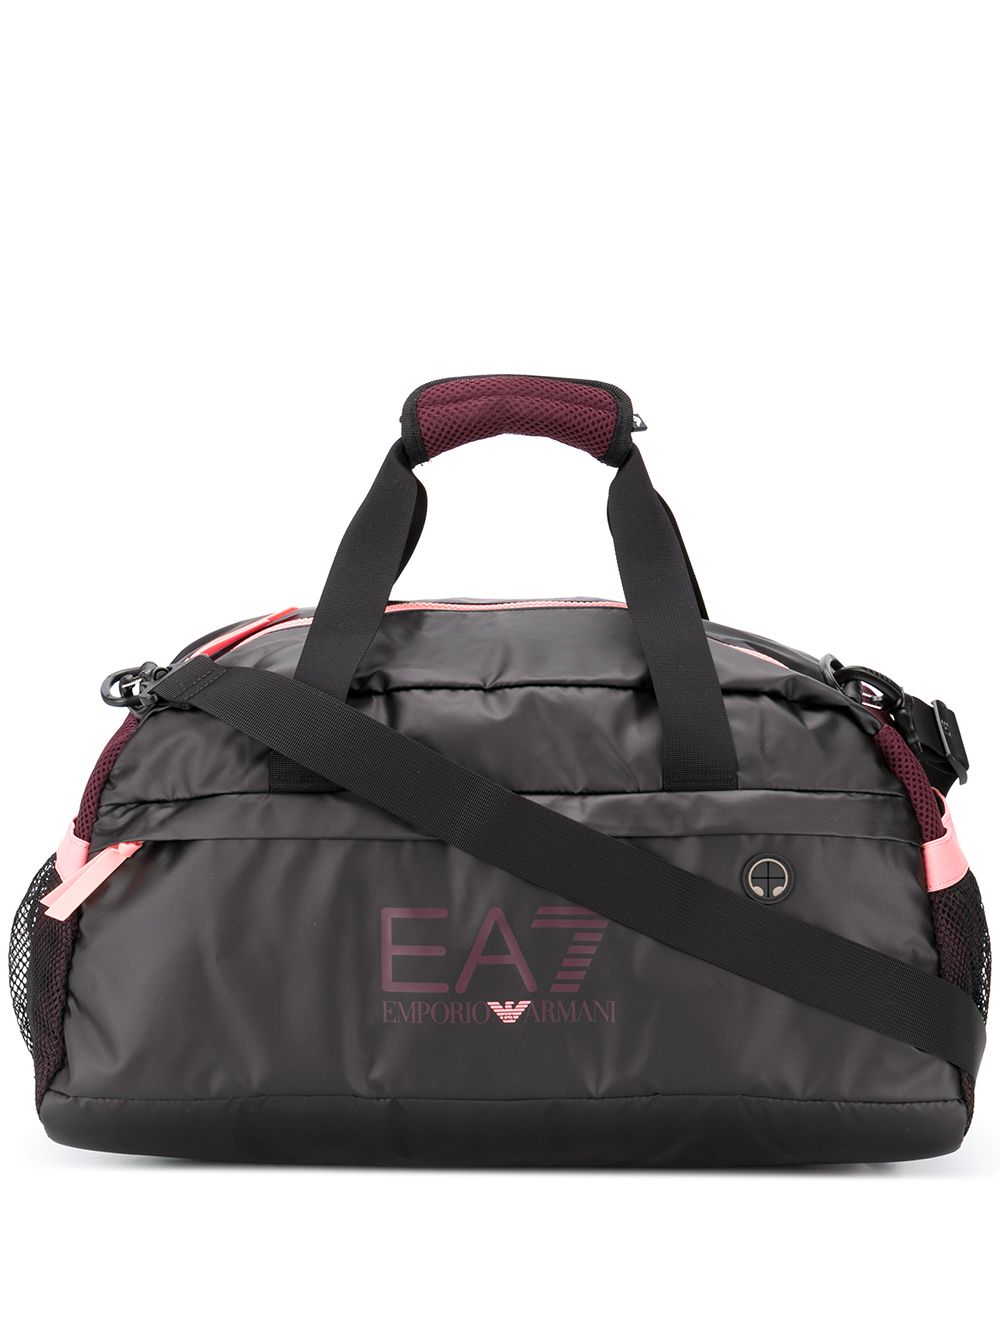 фото Ea7 Emporio Armani logo print gym bag